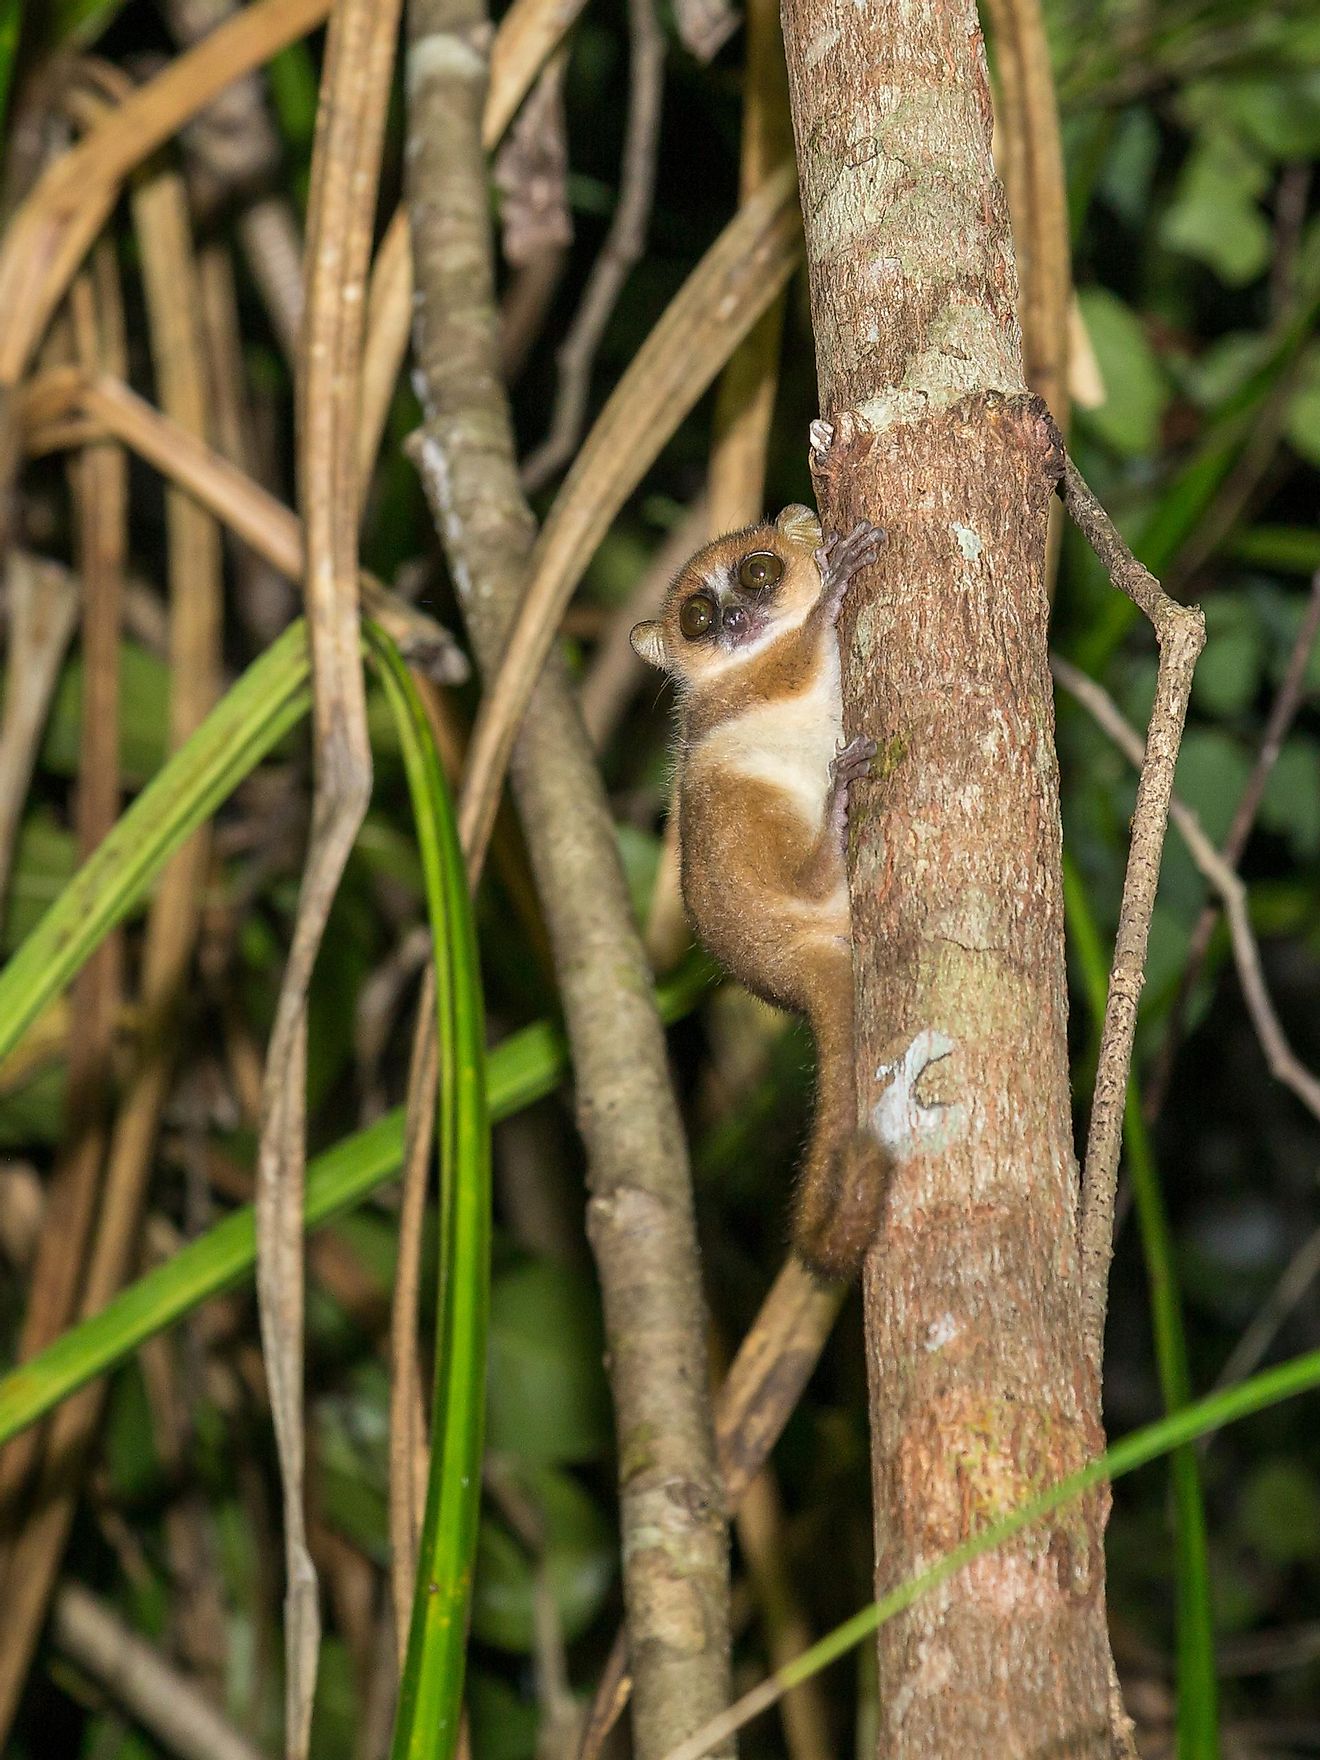 Pygmy mouse lemur on the tree at night. (Microcebus myoxinus) Madagascar. Image credit: Anna Veselova/Shutterstock.com